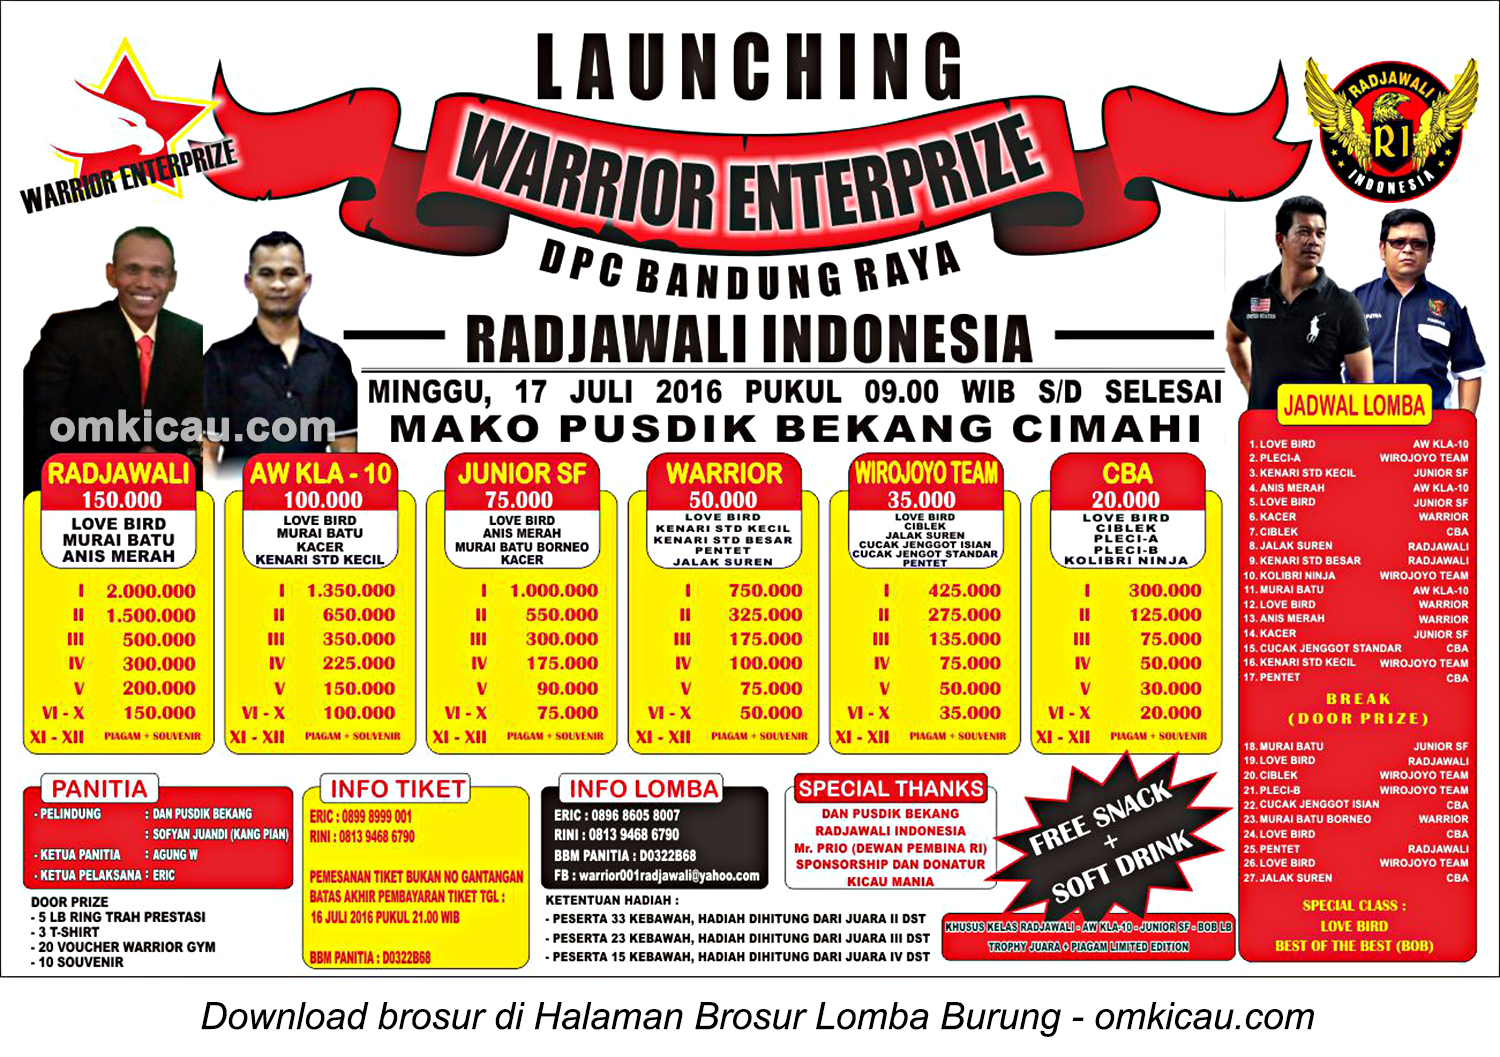 Brosur Launching Warrior Enterprize DPC Bandung Raya Radjawali Indonesia, Cimahi, 17 Juli 2016